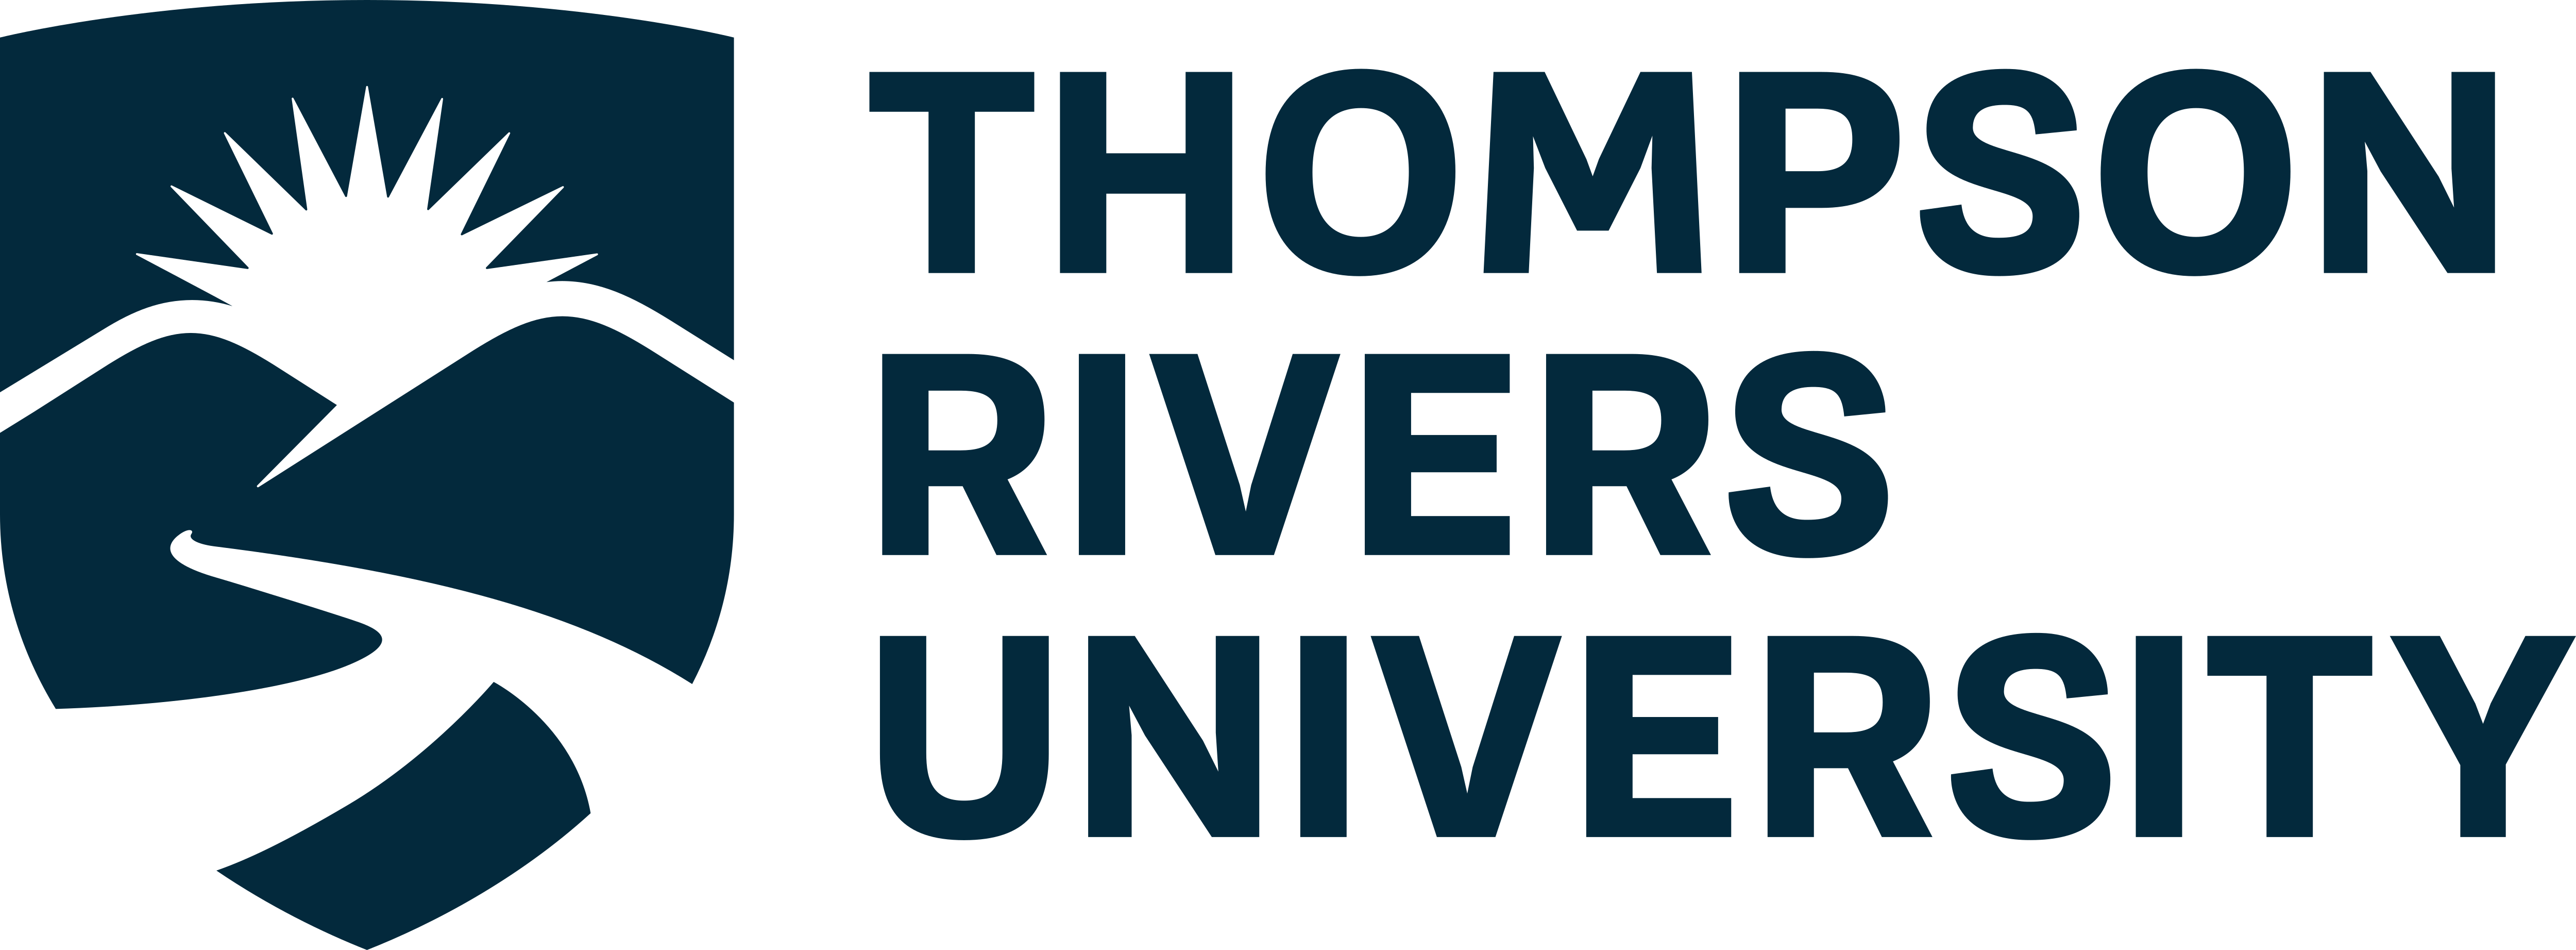 Download Thompson Rivers University - Logos Download